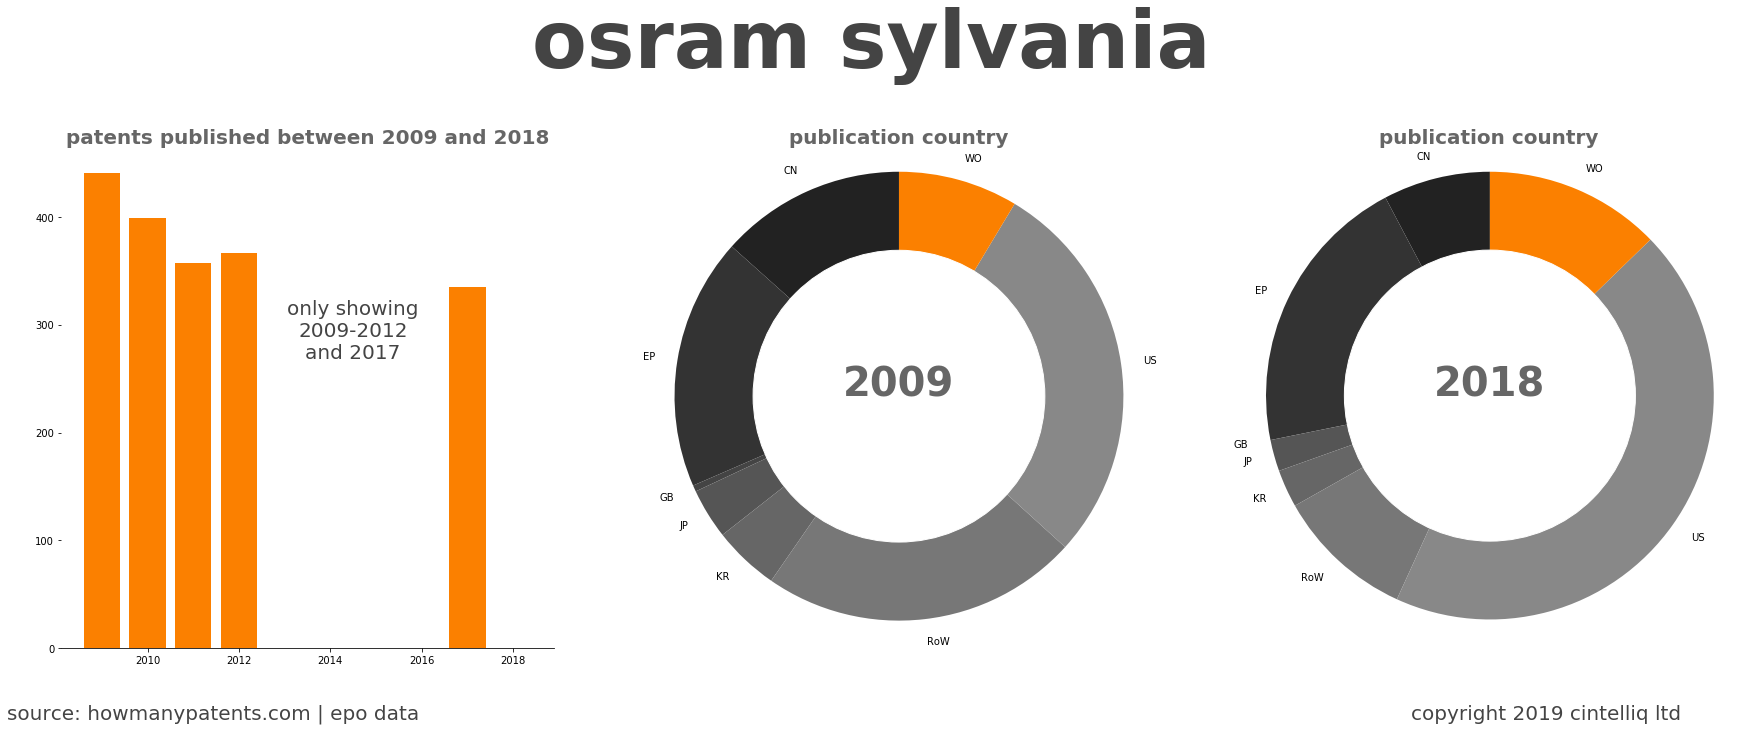 summary of patents for Osram Sylvania